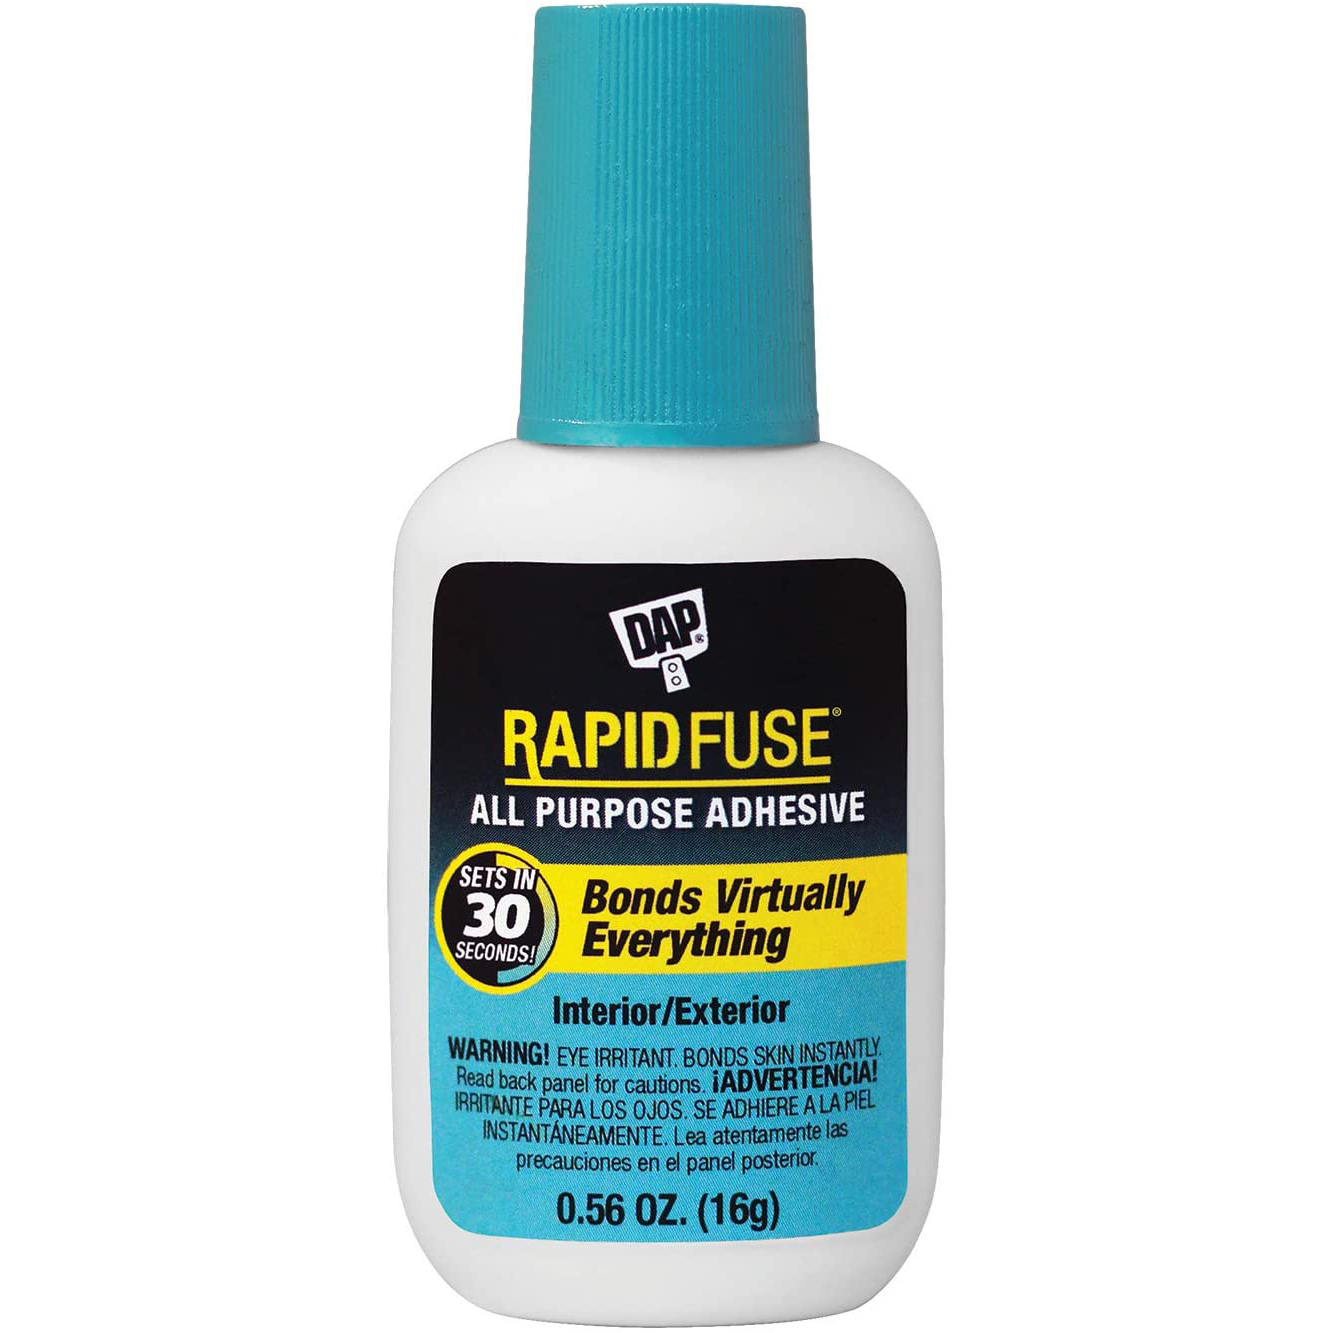 DAP RAPIDFUSE All Purpose Adhesive